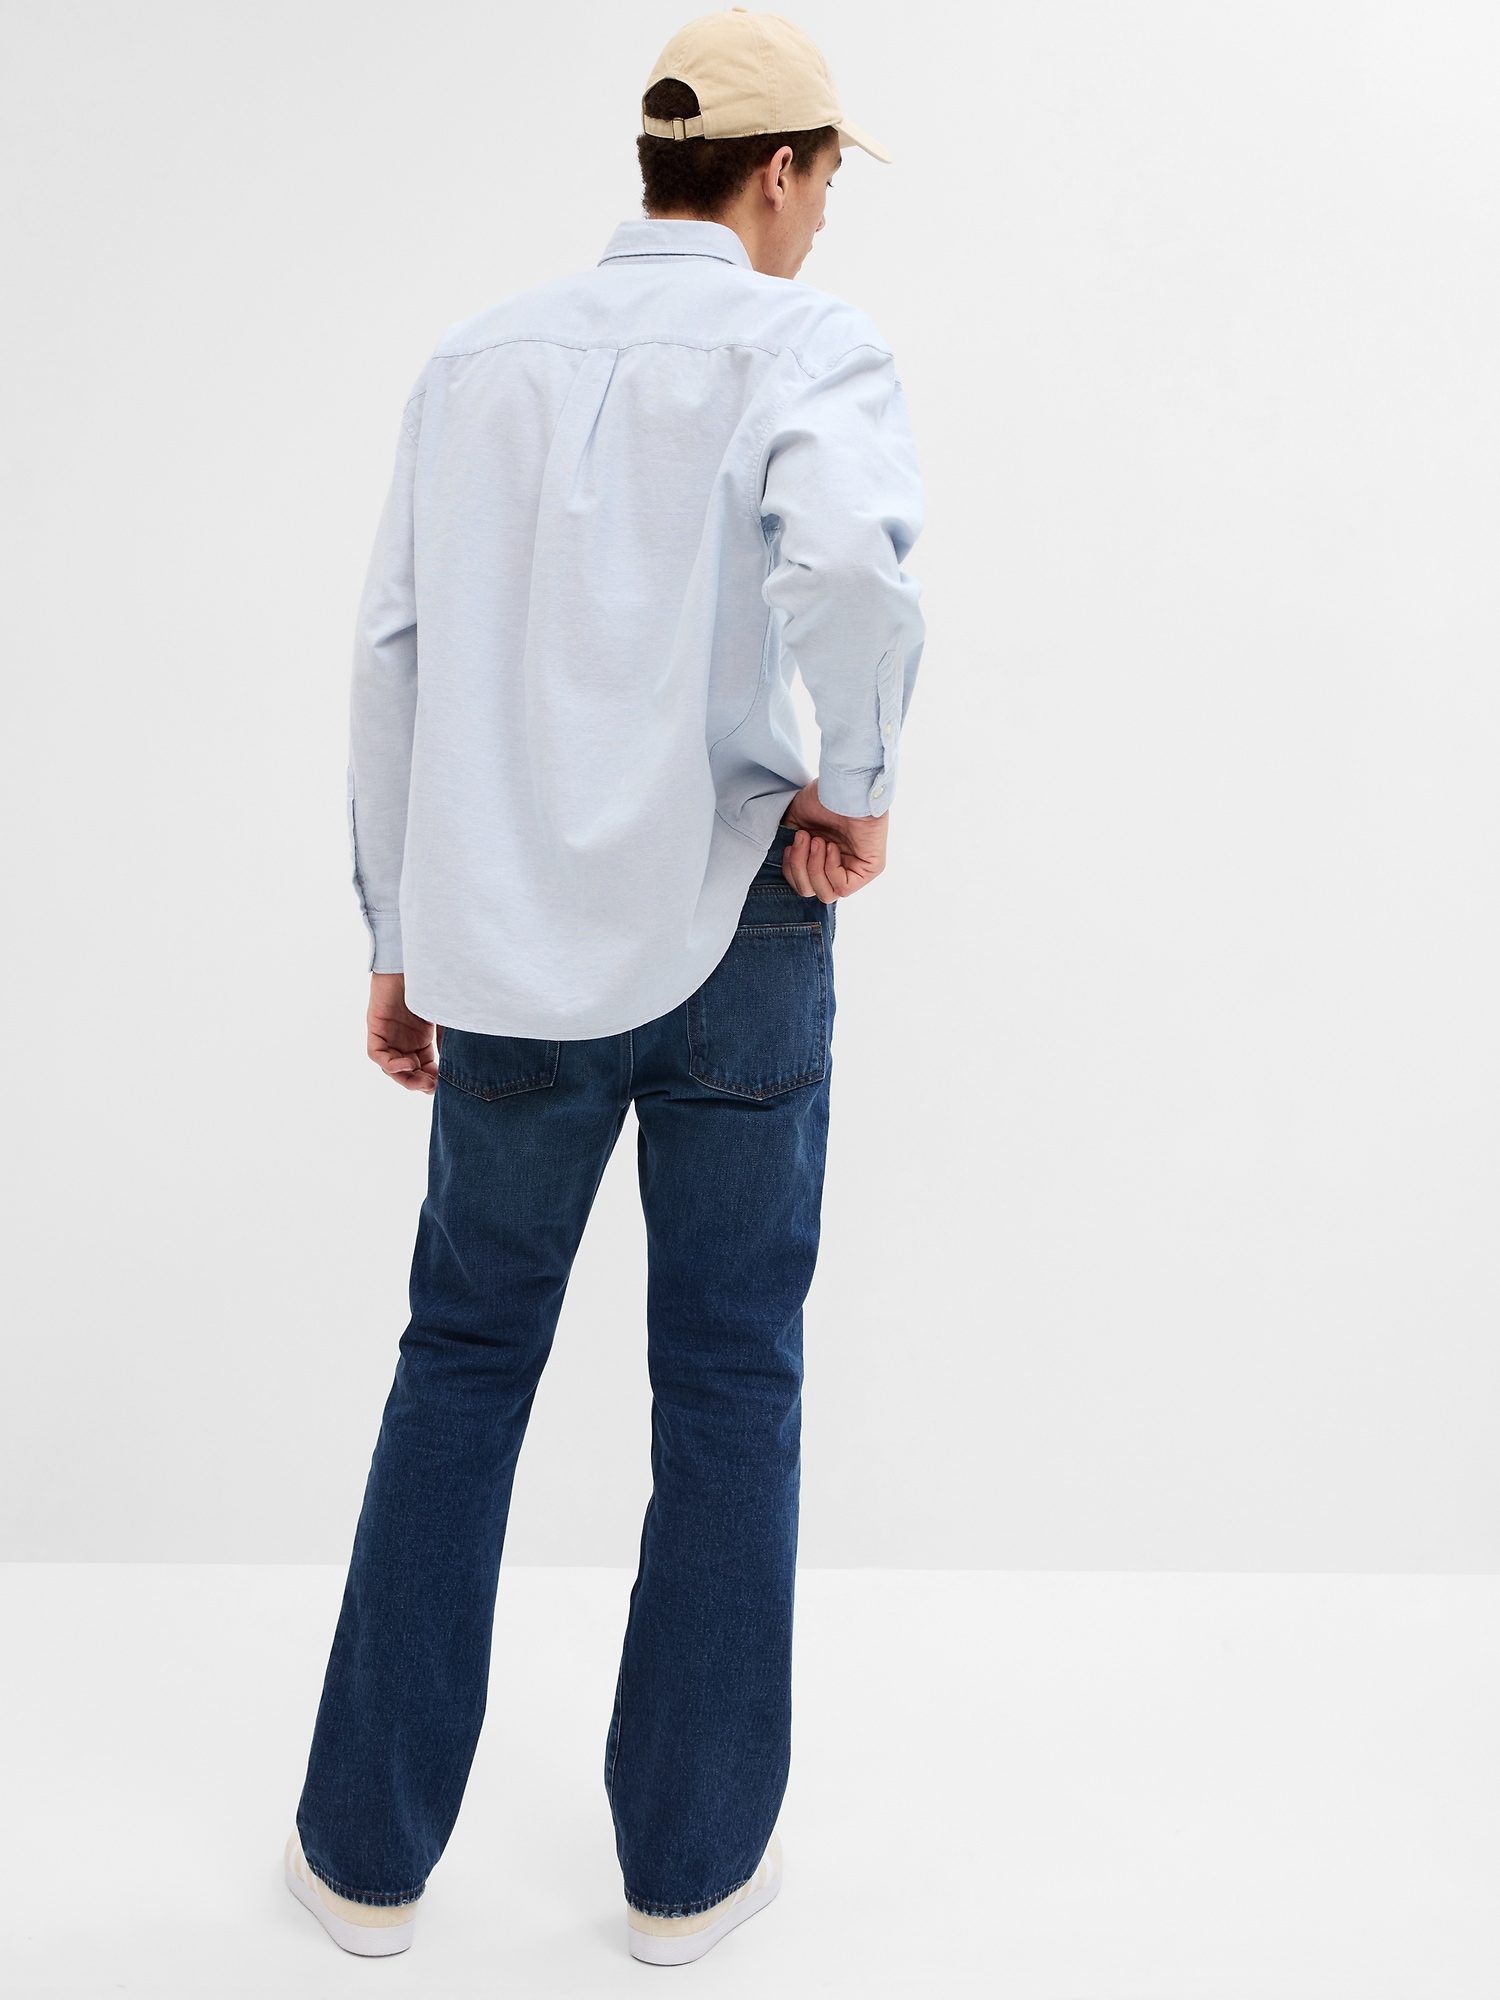 GAP Low Rise Boot Cut Stretch White Jeans - Bijoux Closet